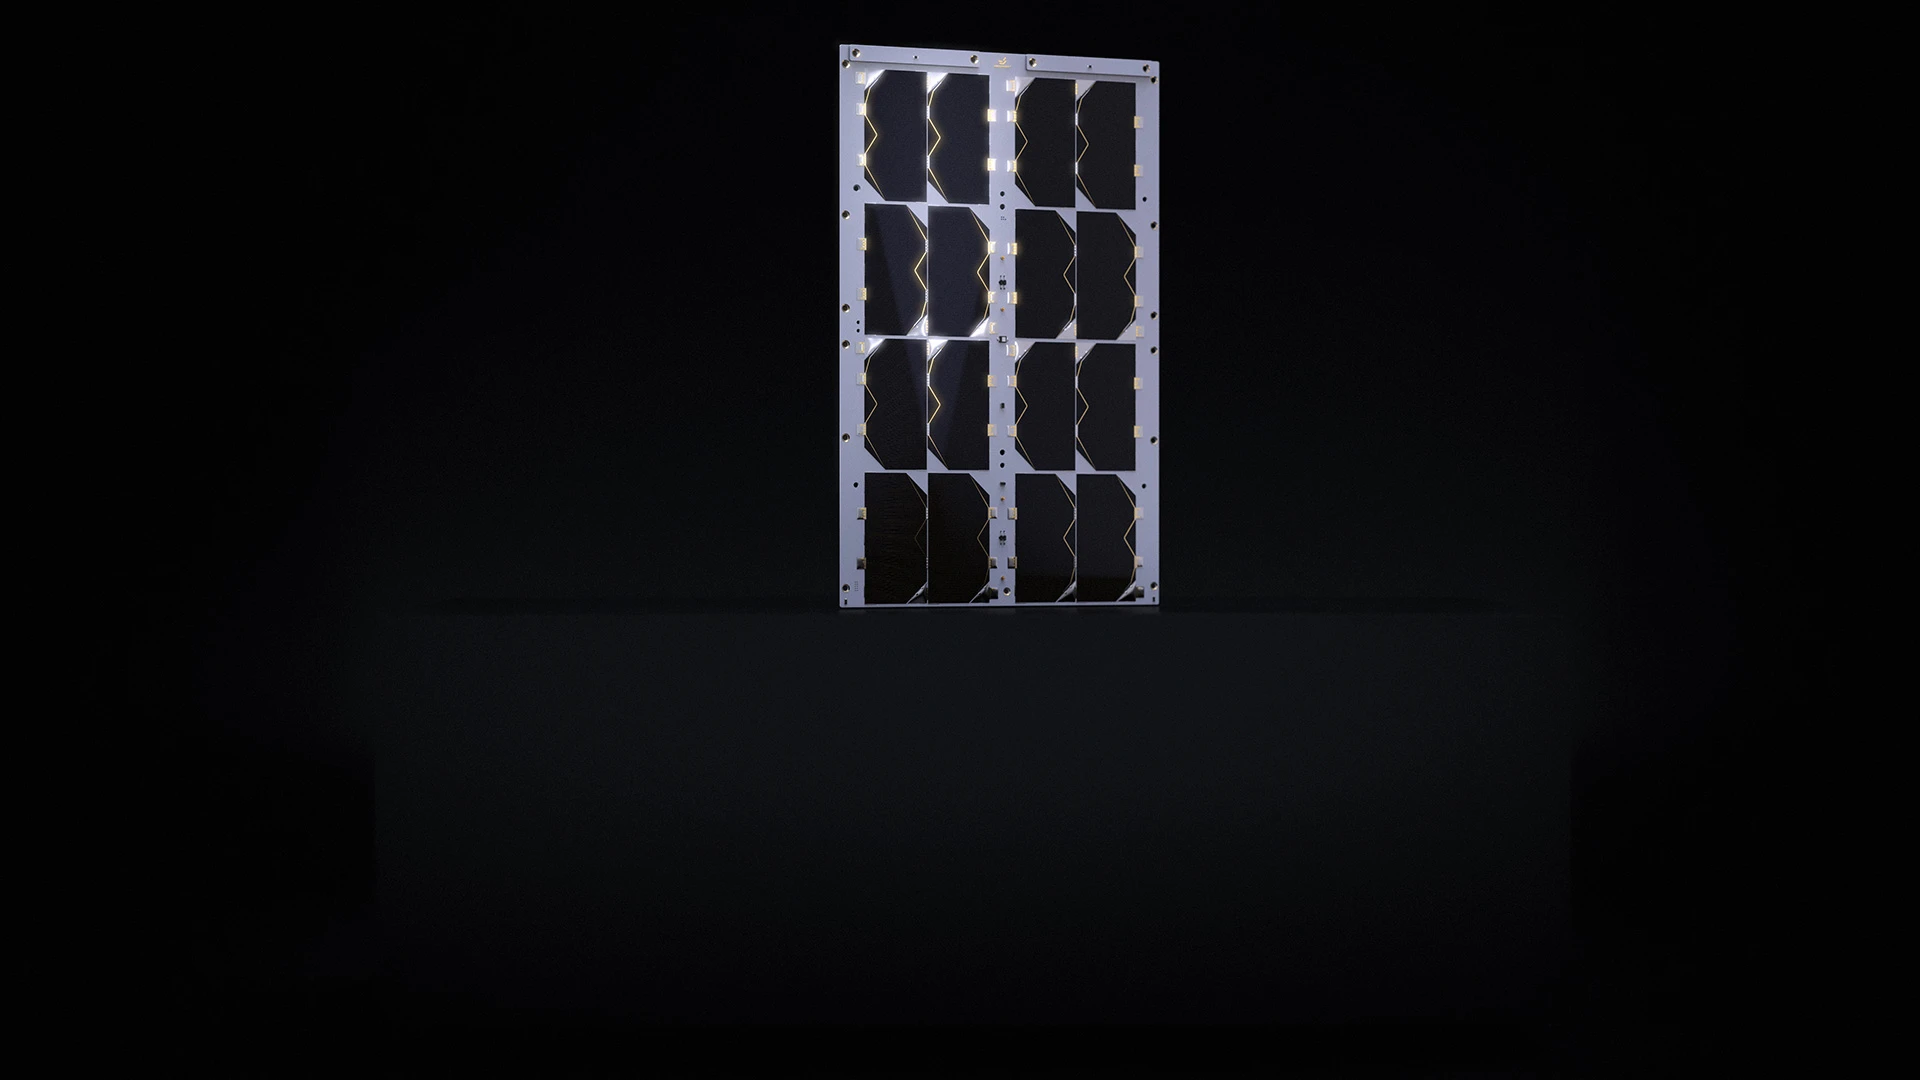 6U Solar Panel web render 1